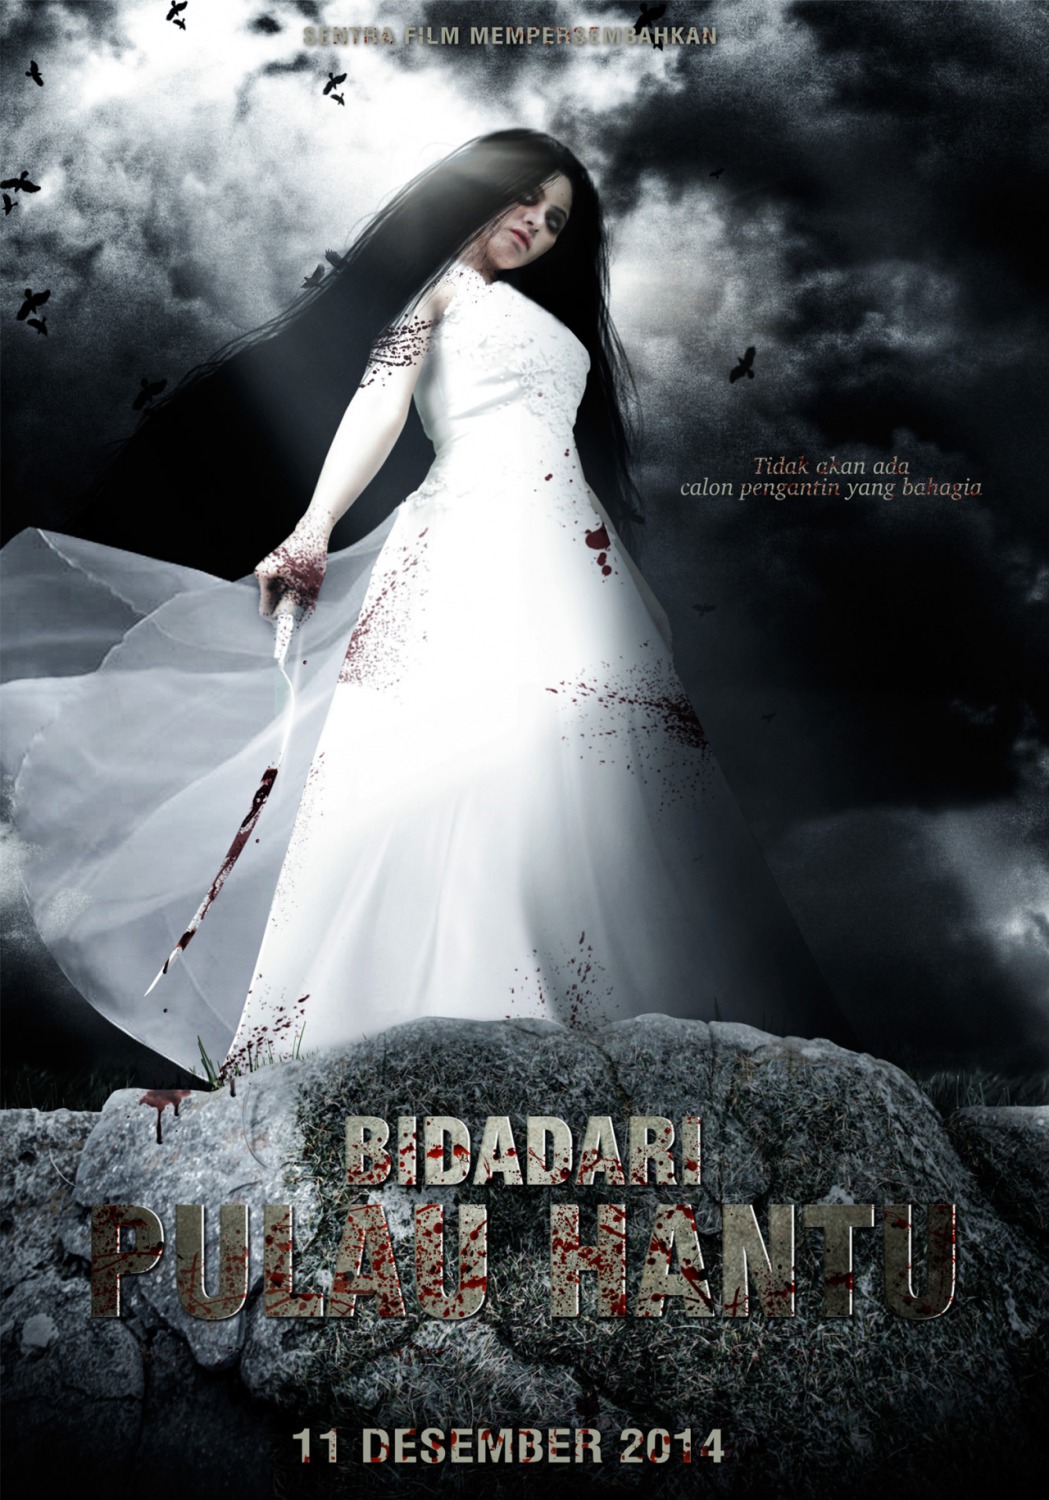 Extra Large Movie Poster Image for Bidadari Pulau Hantu 